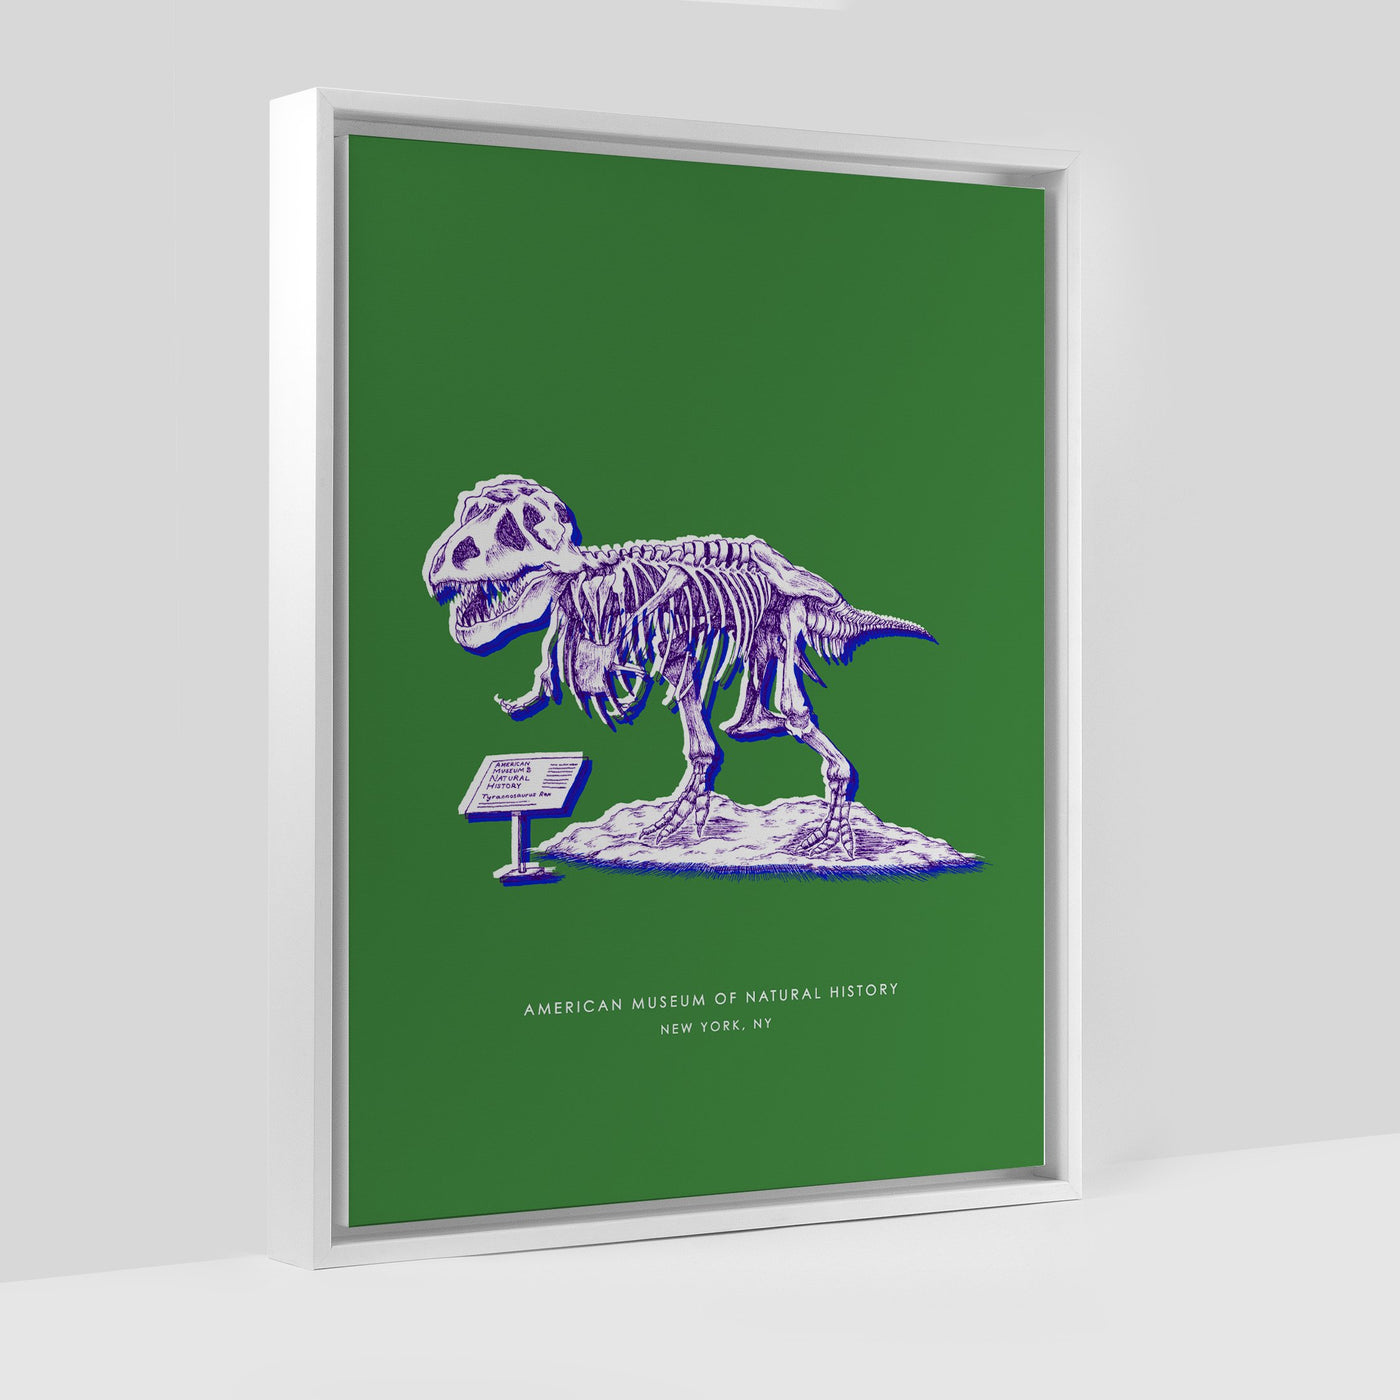 Gallery Prints Green Canvas / 8x10 / White Frame New York Dinosaur Print dombezalergii